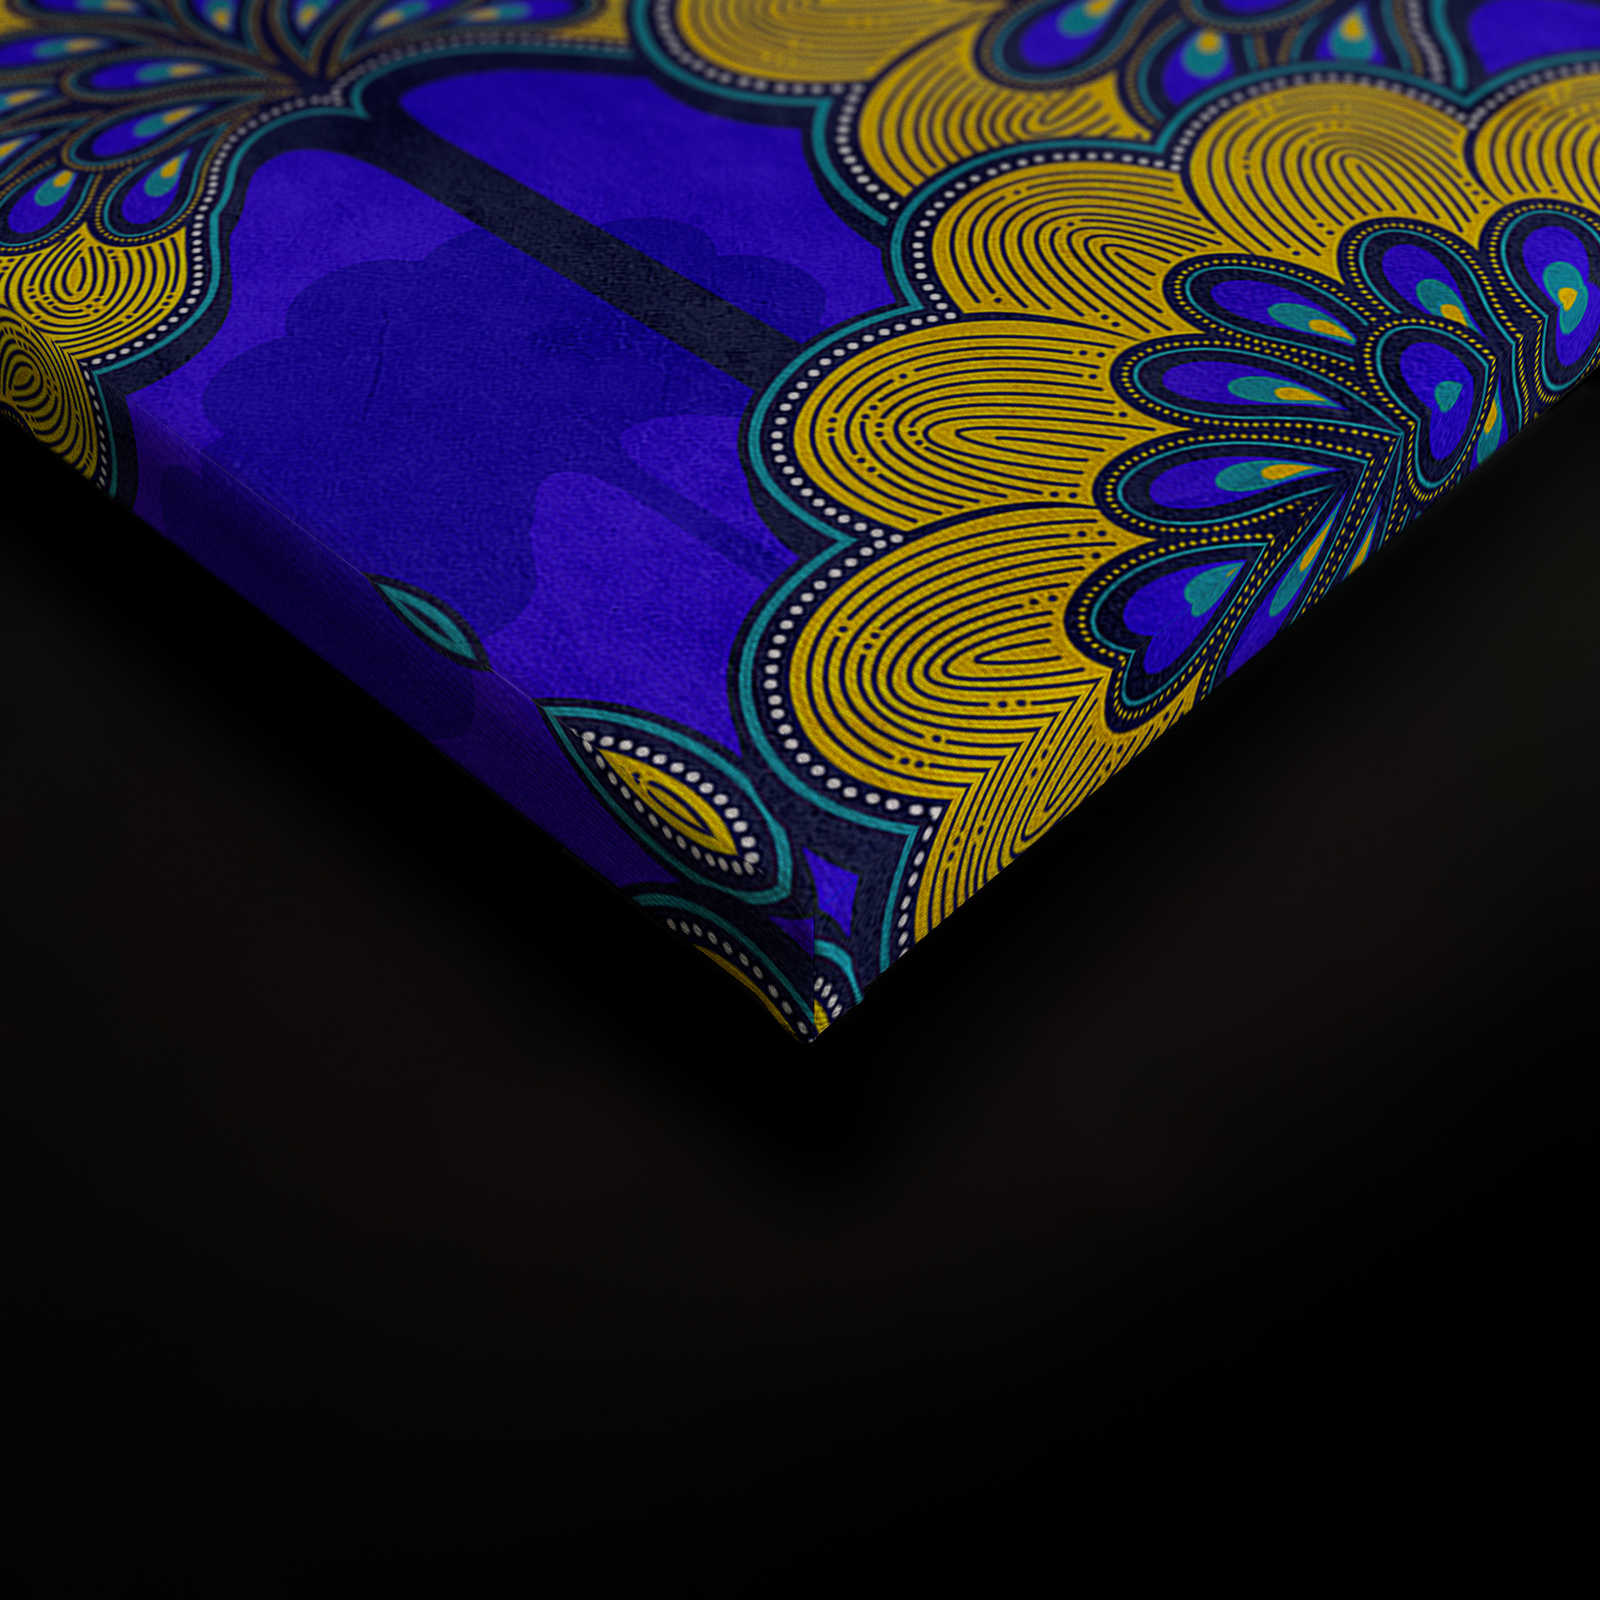             Dakar 1 - Canvas painting African Textile Pattern Blue & Yellow - 1.20 m x 0.80 m
        